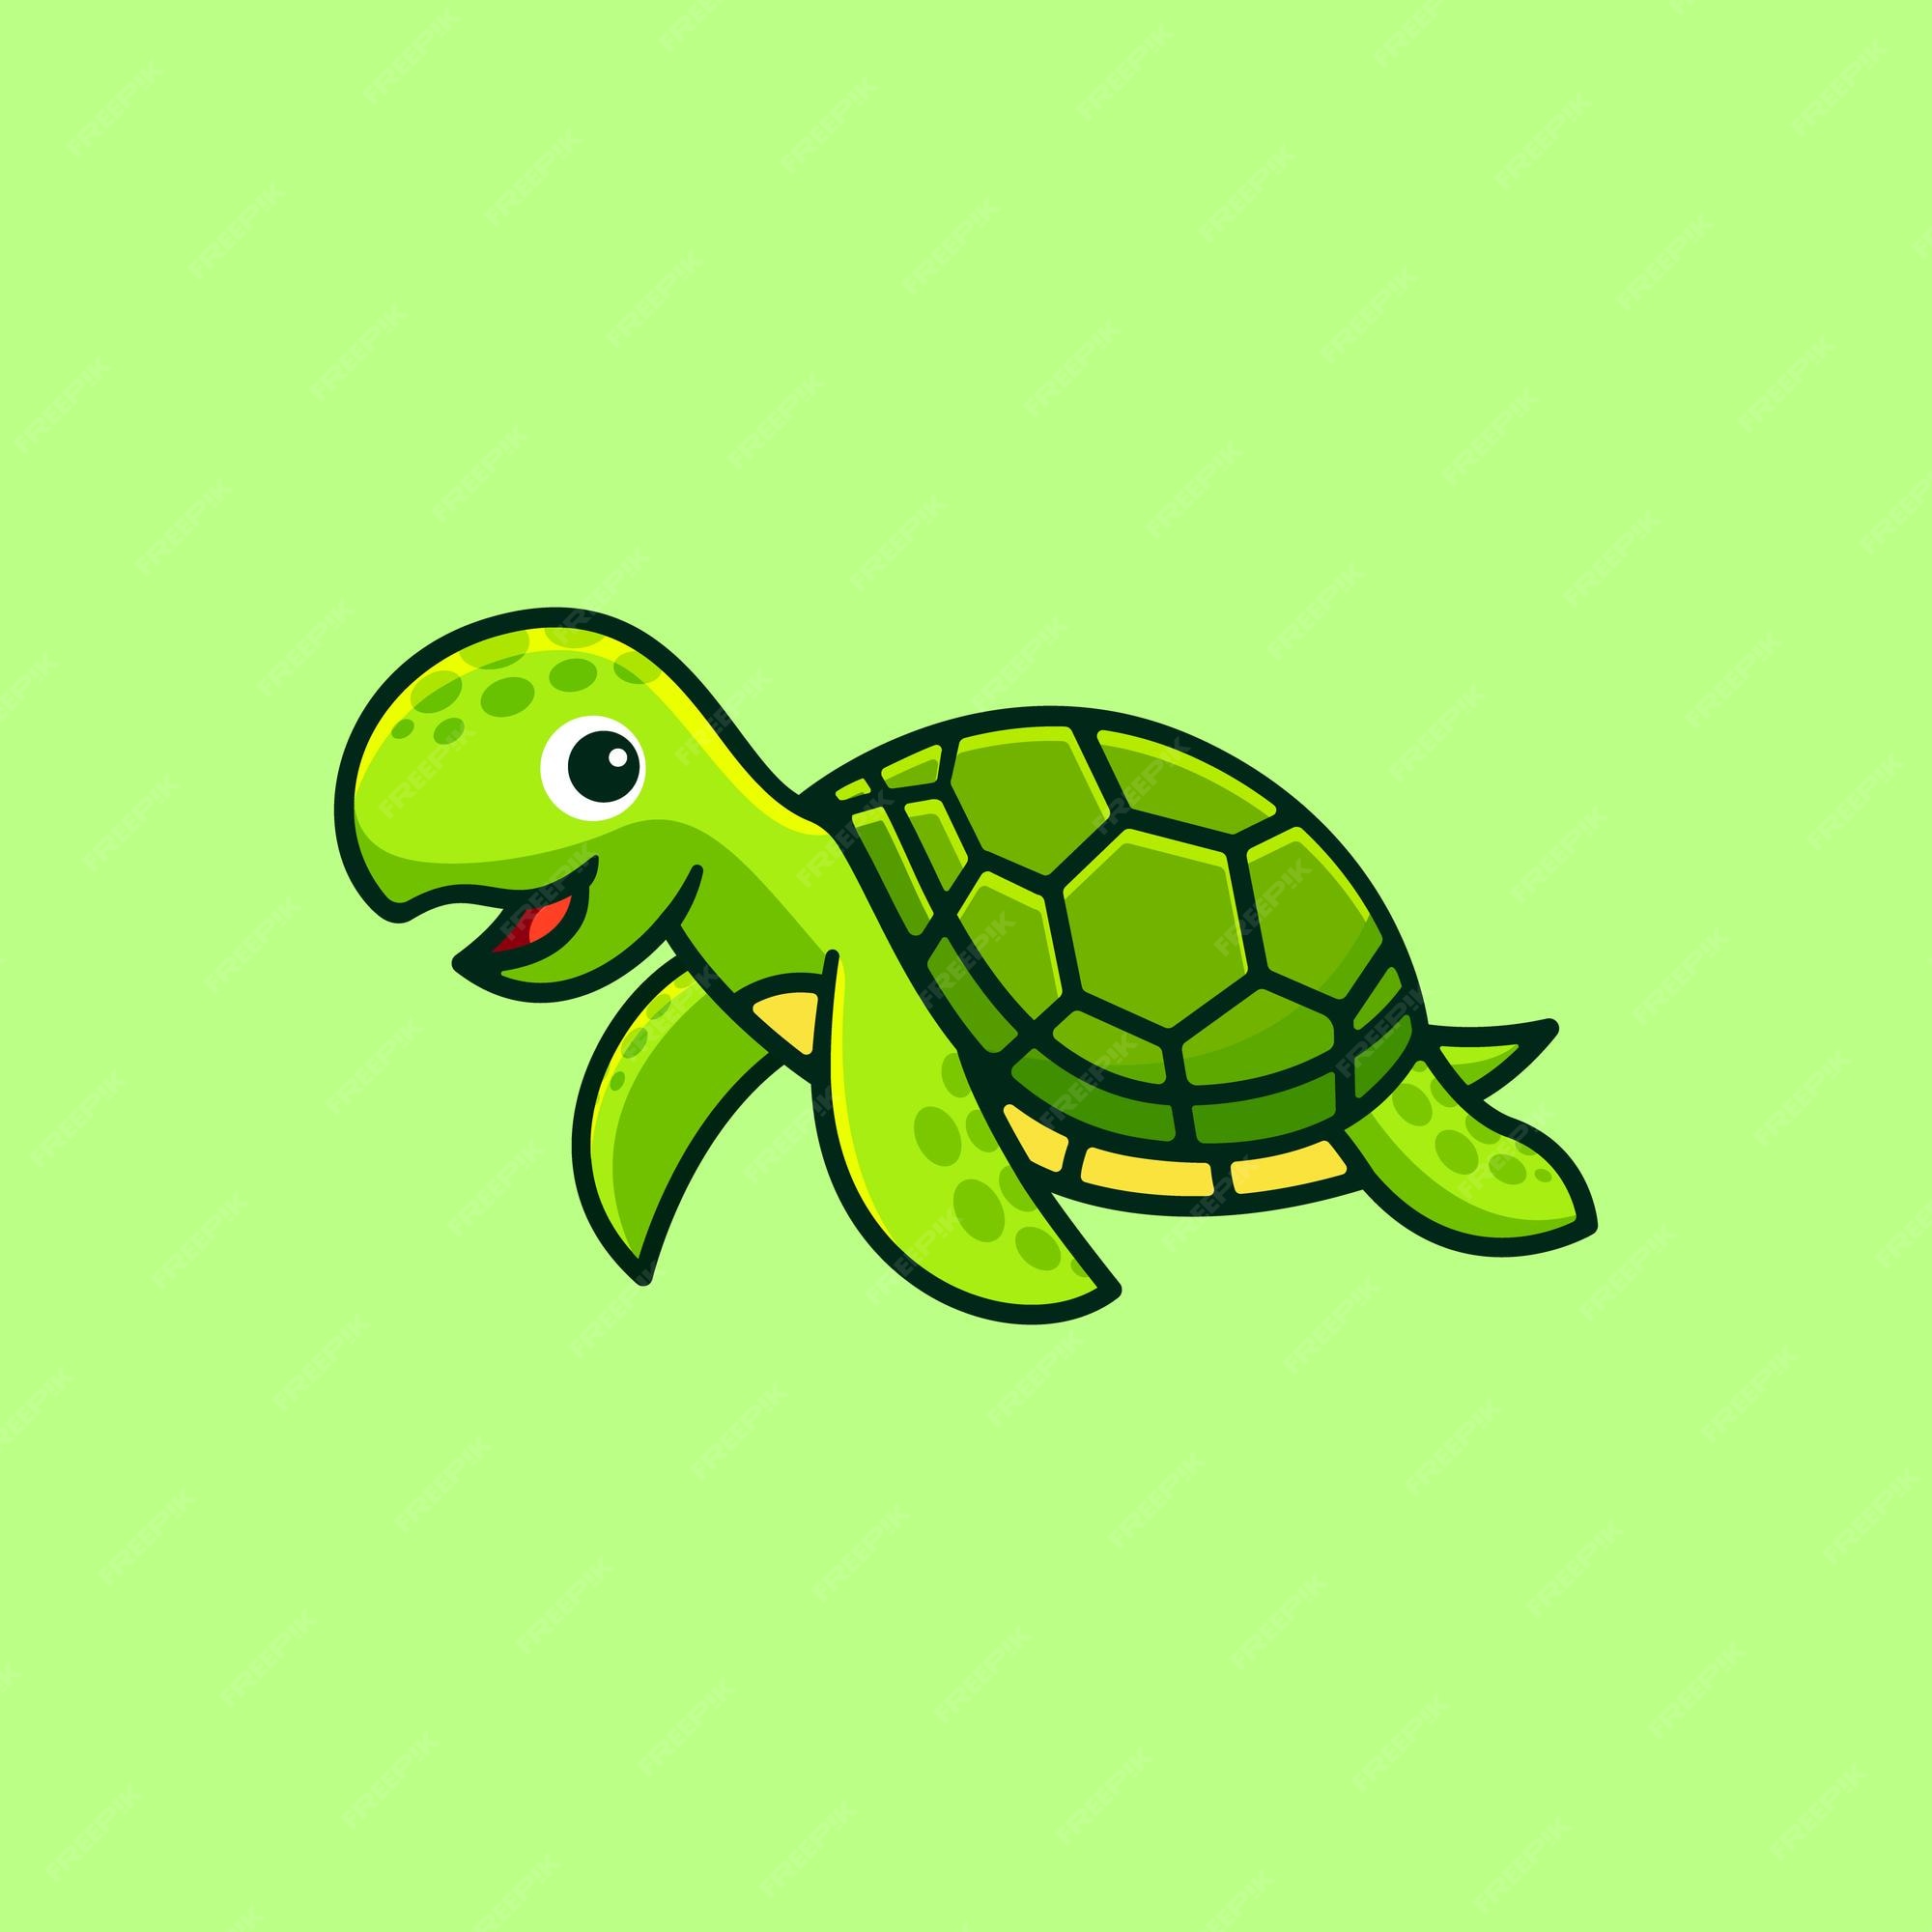 Premium Vector | A happy cute sea turtle cartoon character illustration